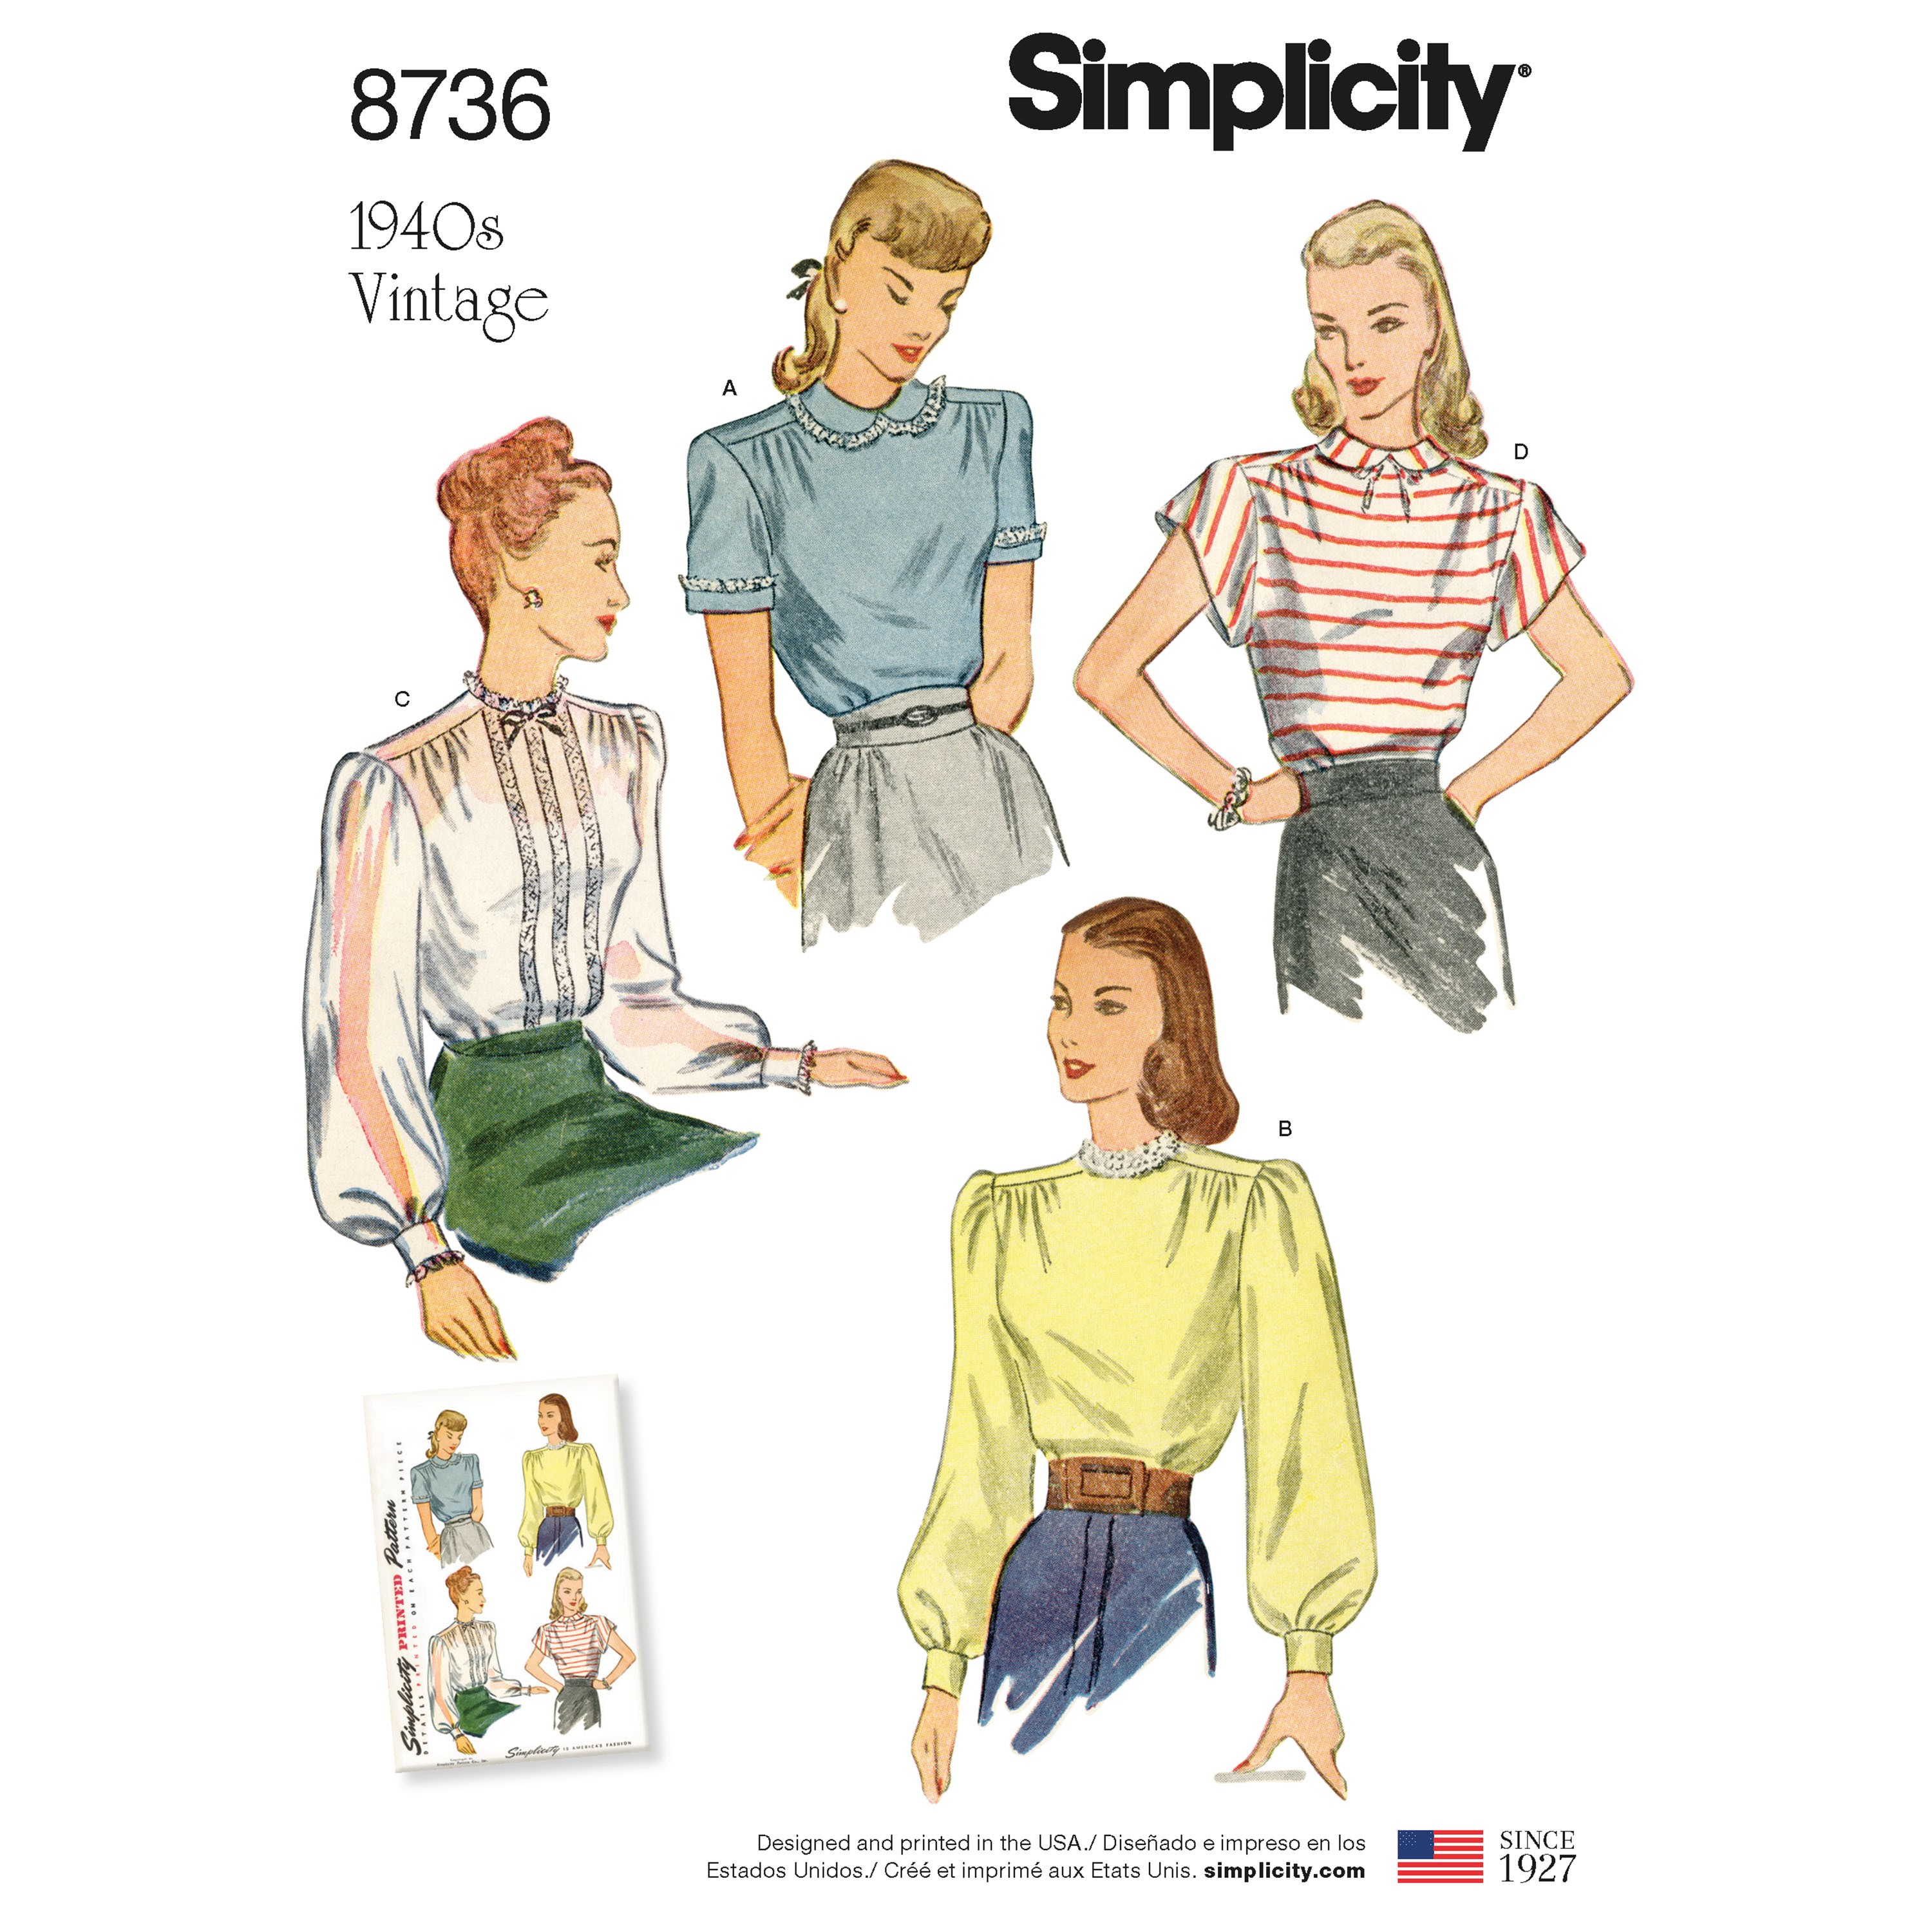 Girls Knit Tunics and Leggings Simplicity Sewing Pattern 8105